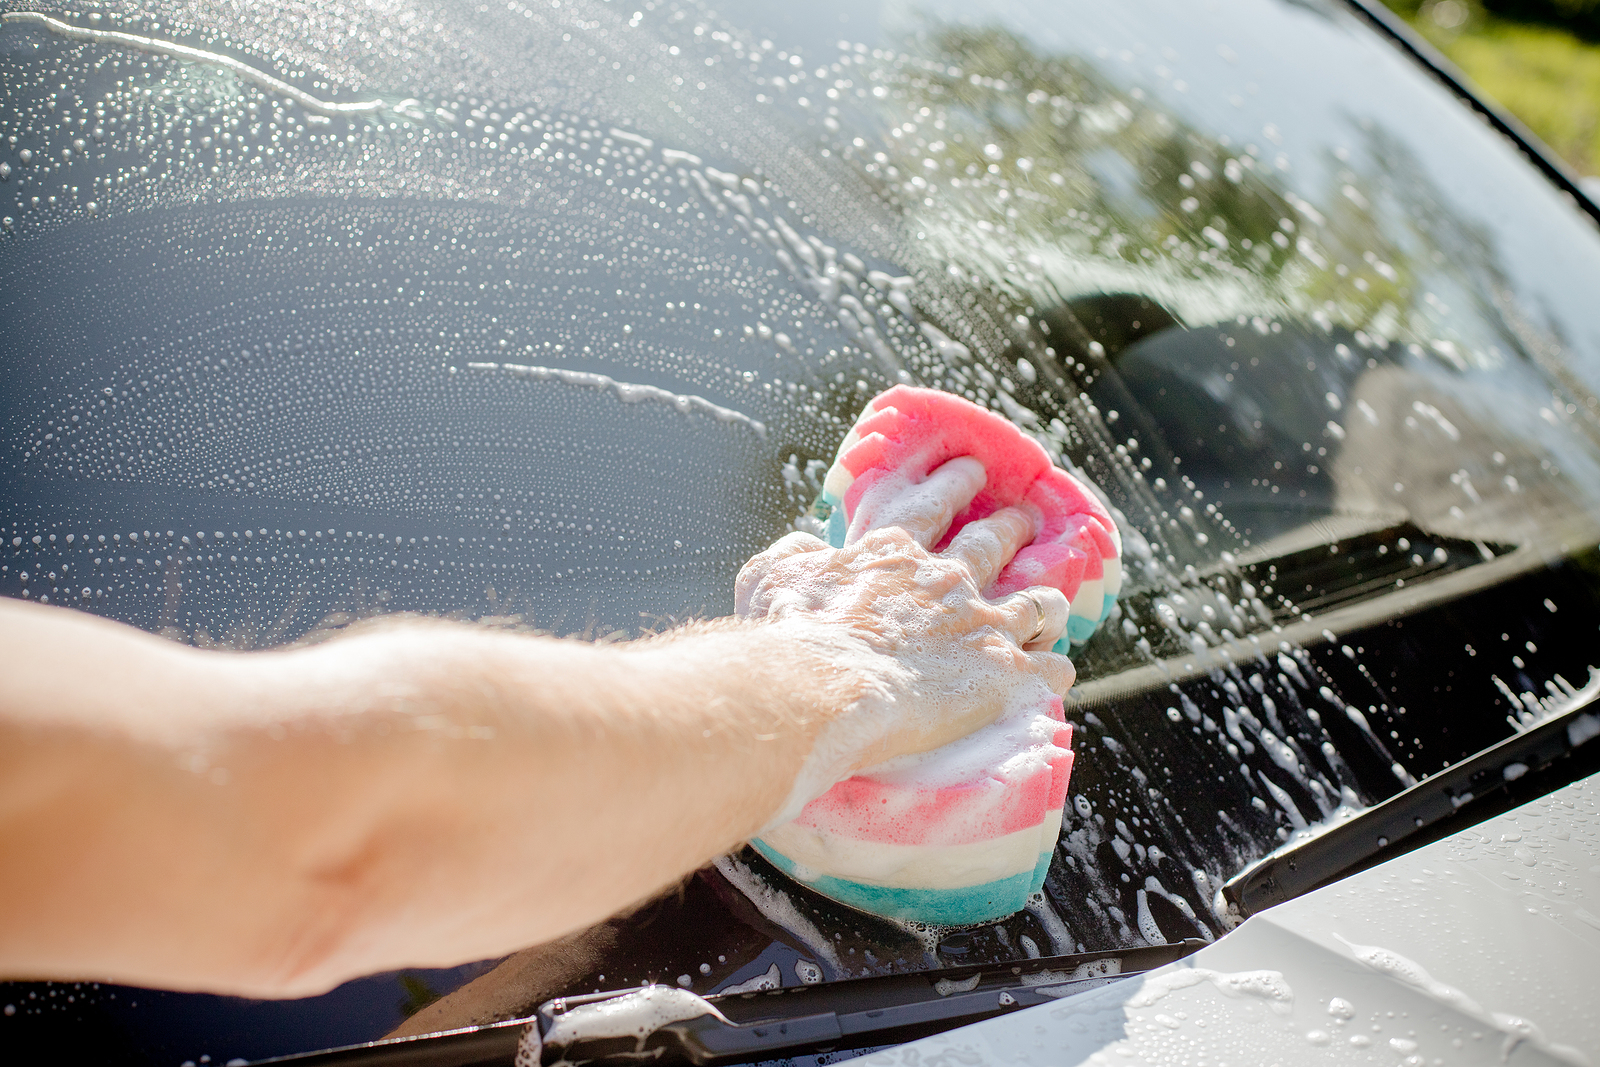 How to clean car windows